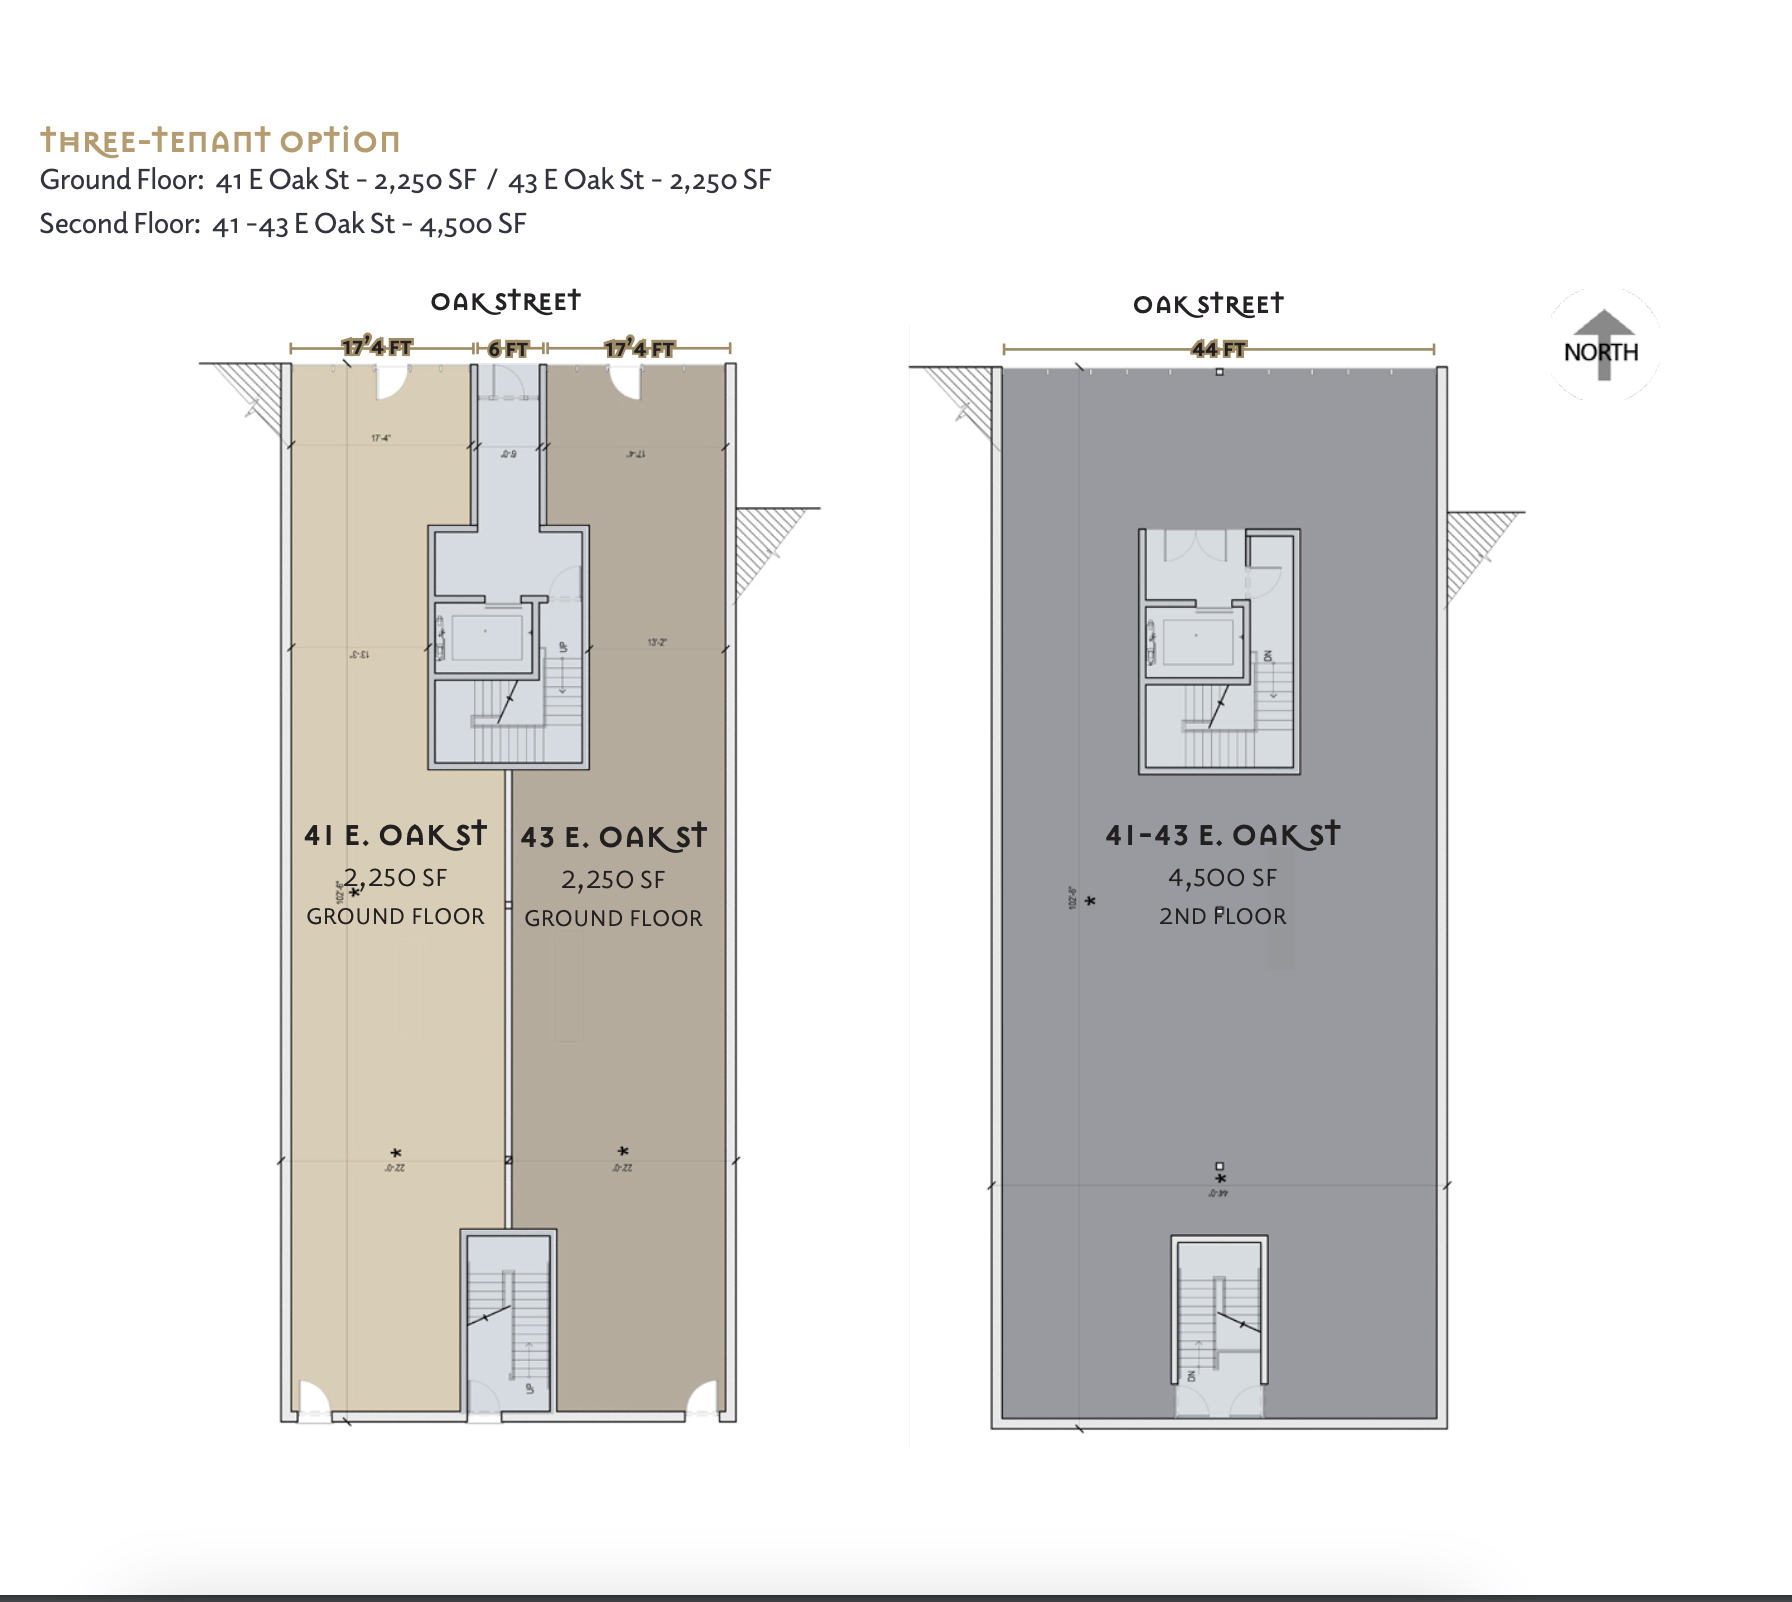 Floor plans for hybrid / three-tenant option